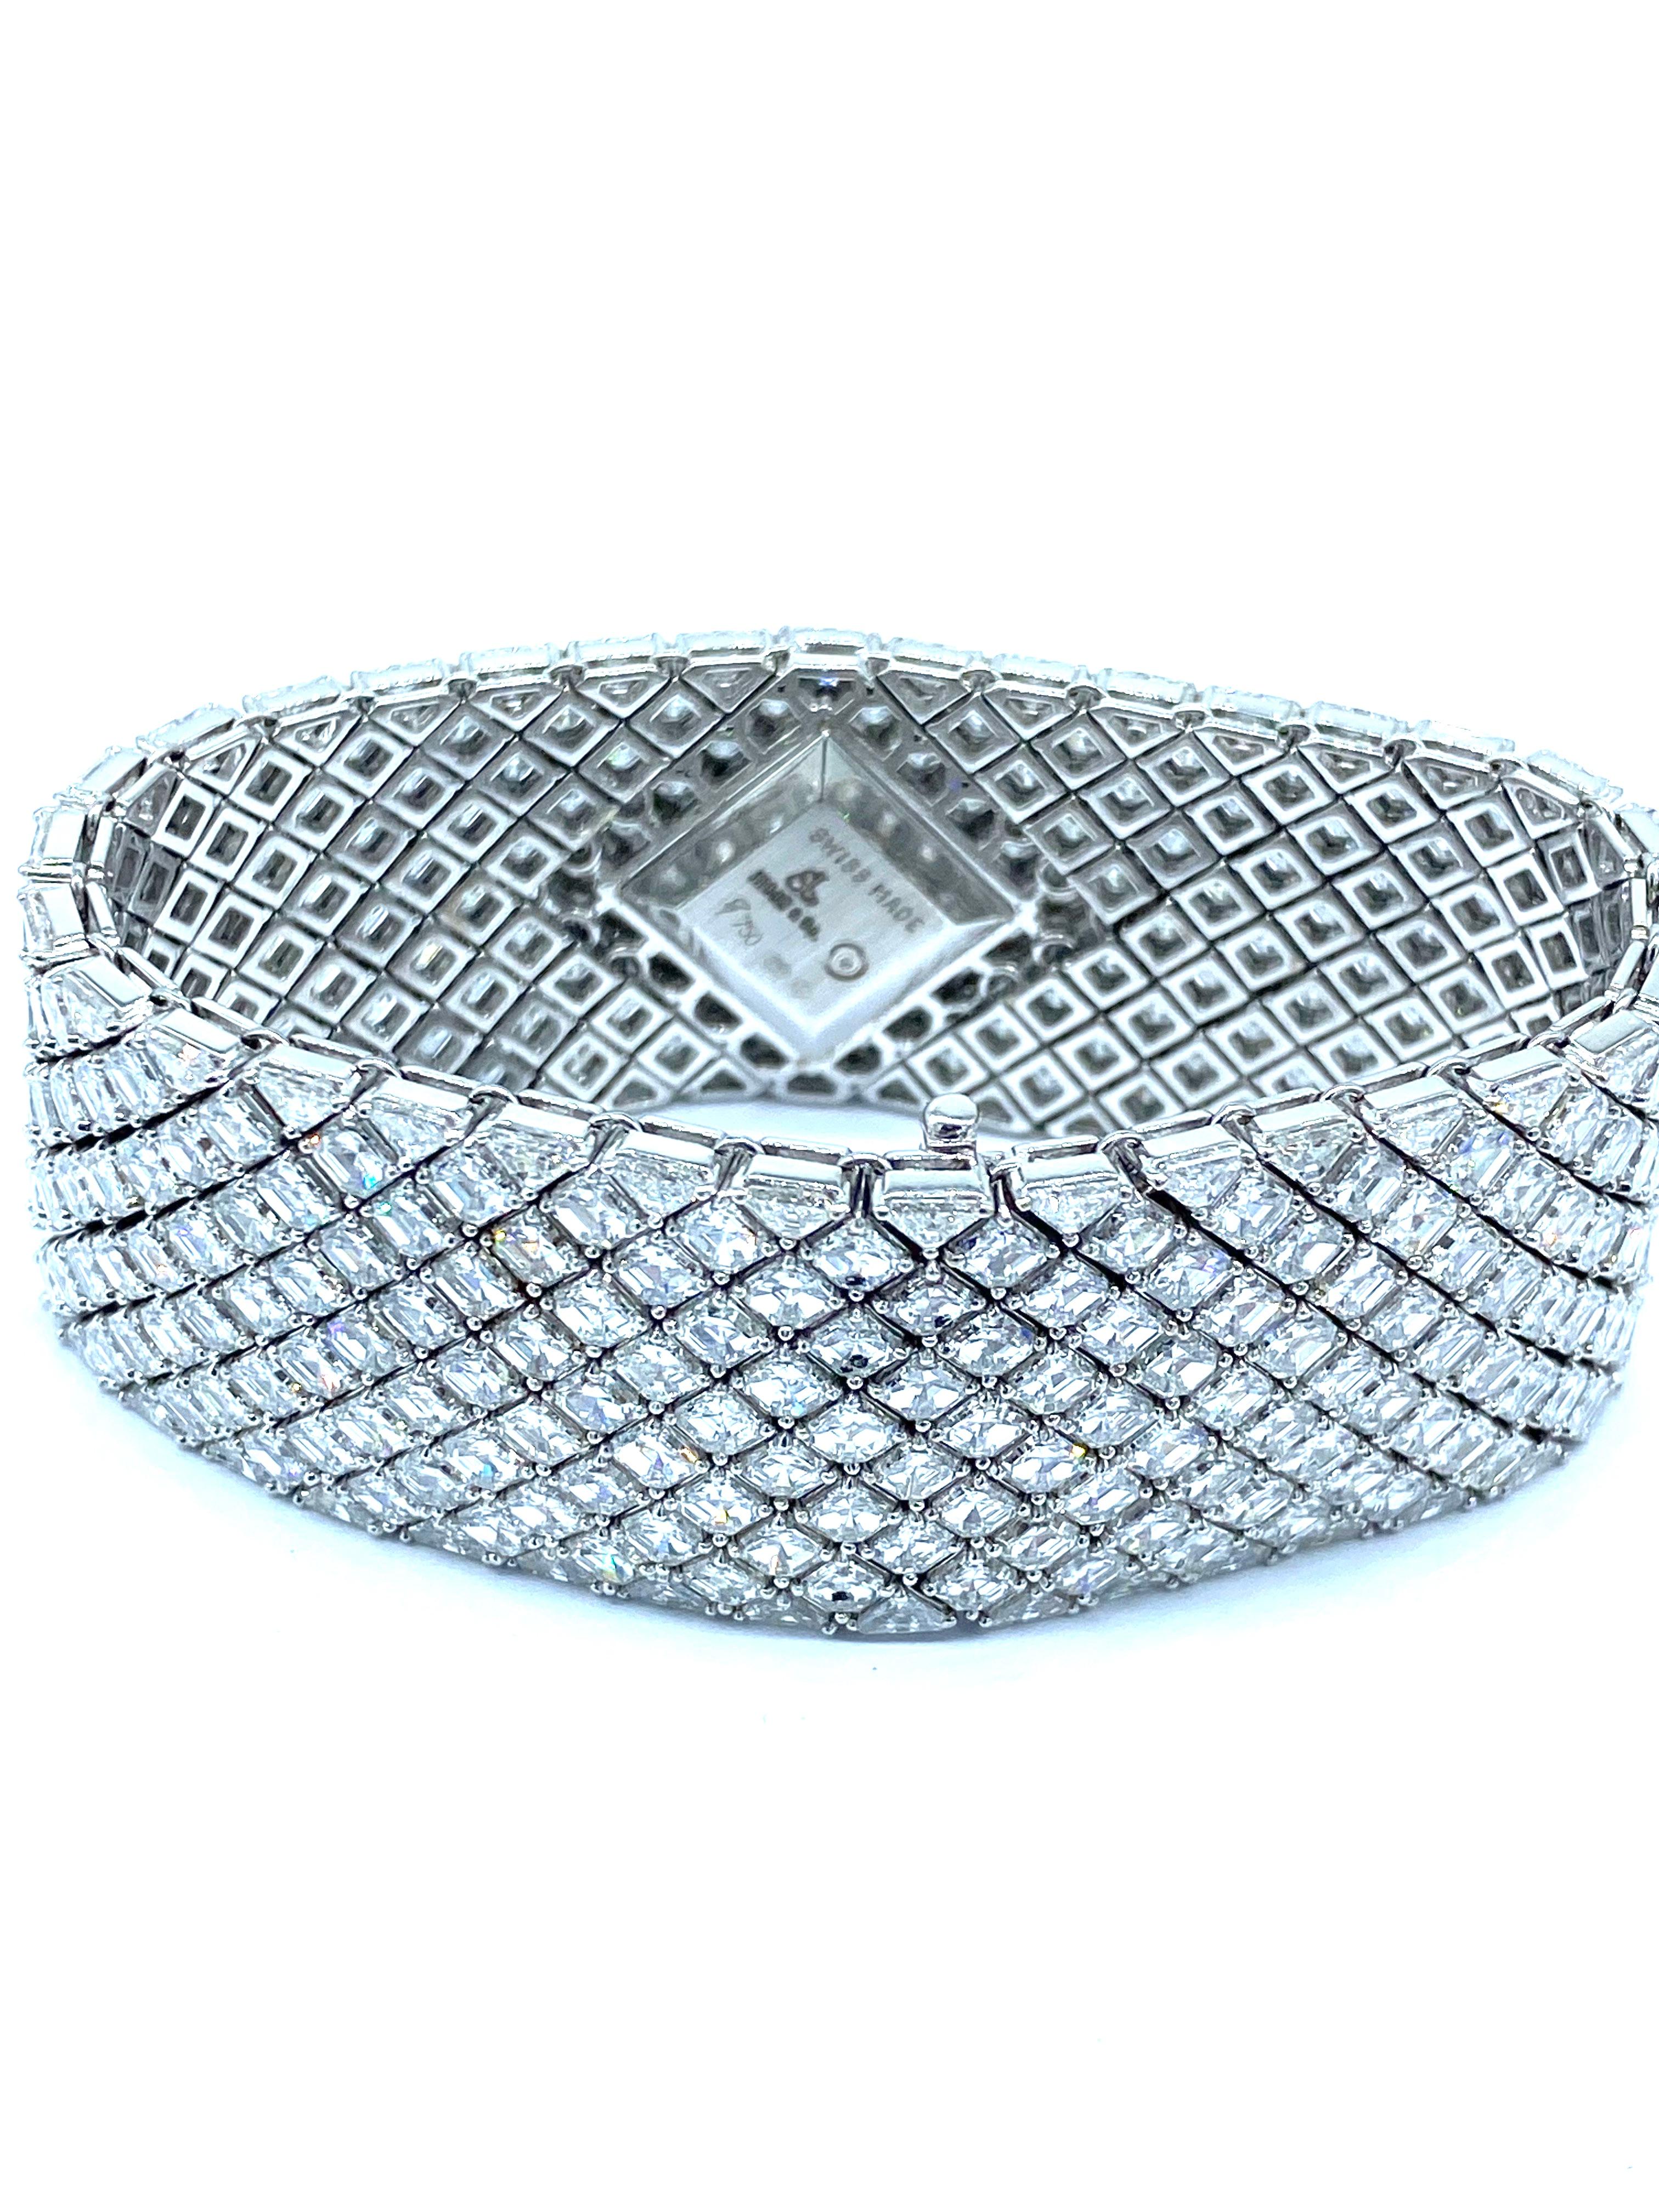 Jacob & Co Infinity Diamond Ladies Watch 50 Carat VS1 E-F Endless Bracelet In Excellent Condition In Laguna Hills, CA